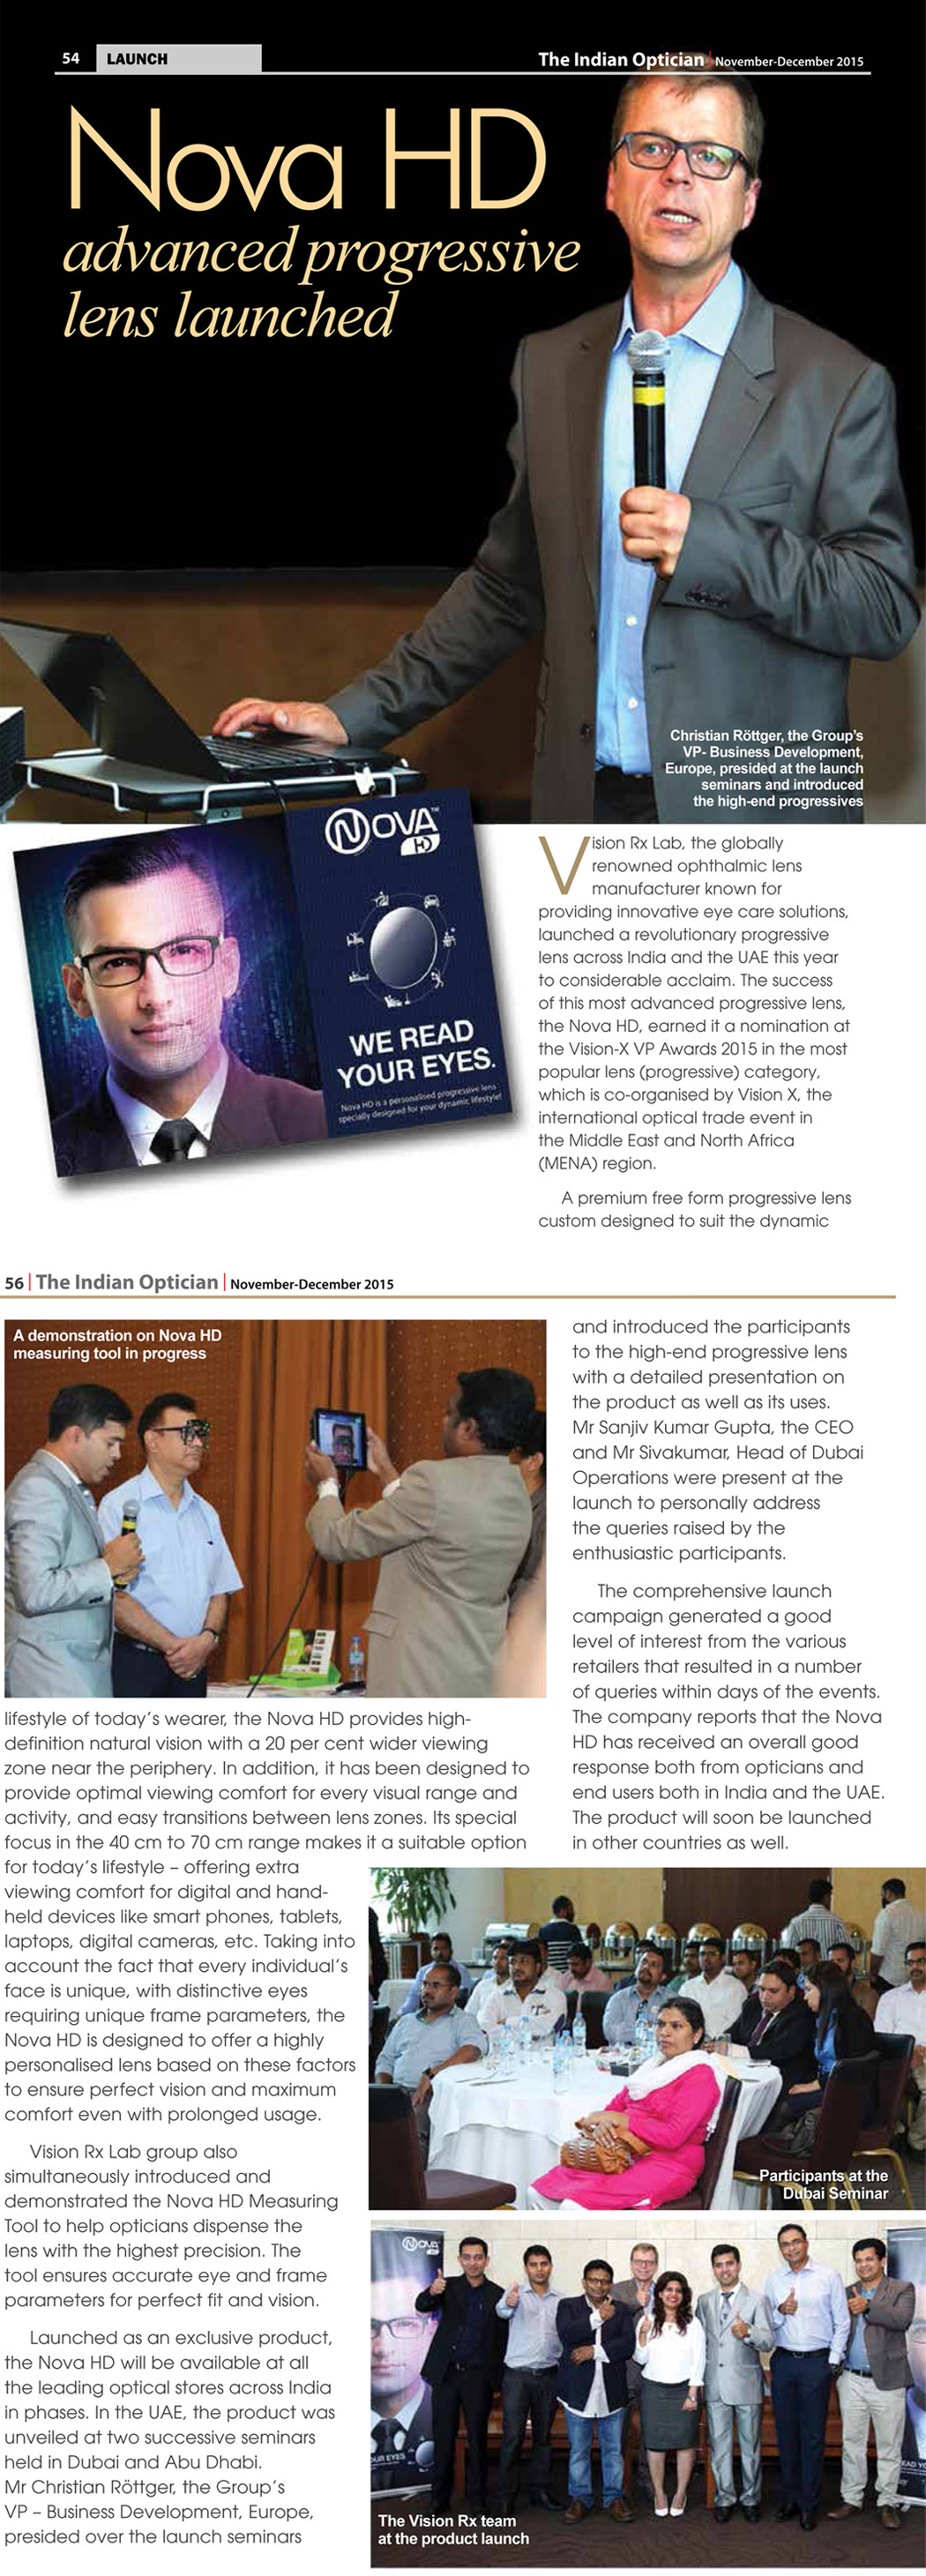 The Indian Optician covers Nova HD Launch